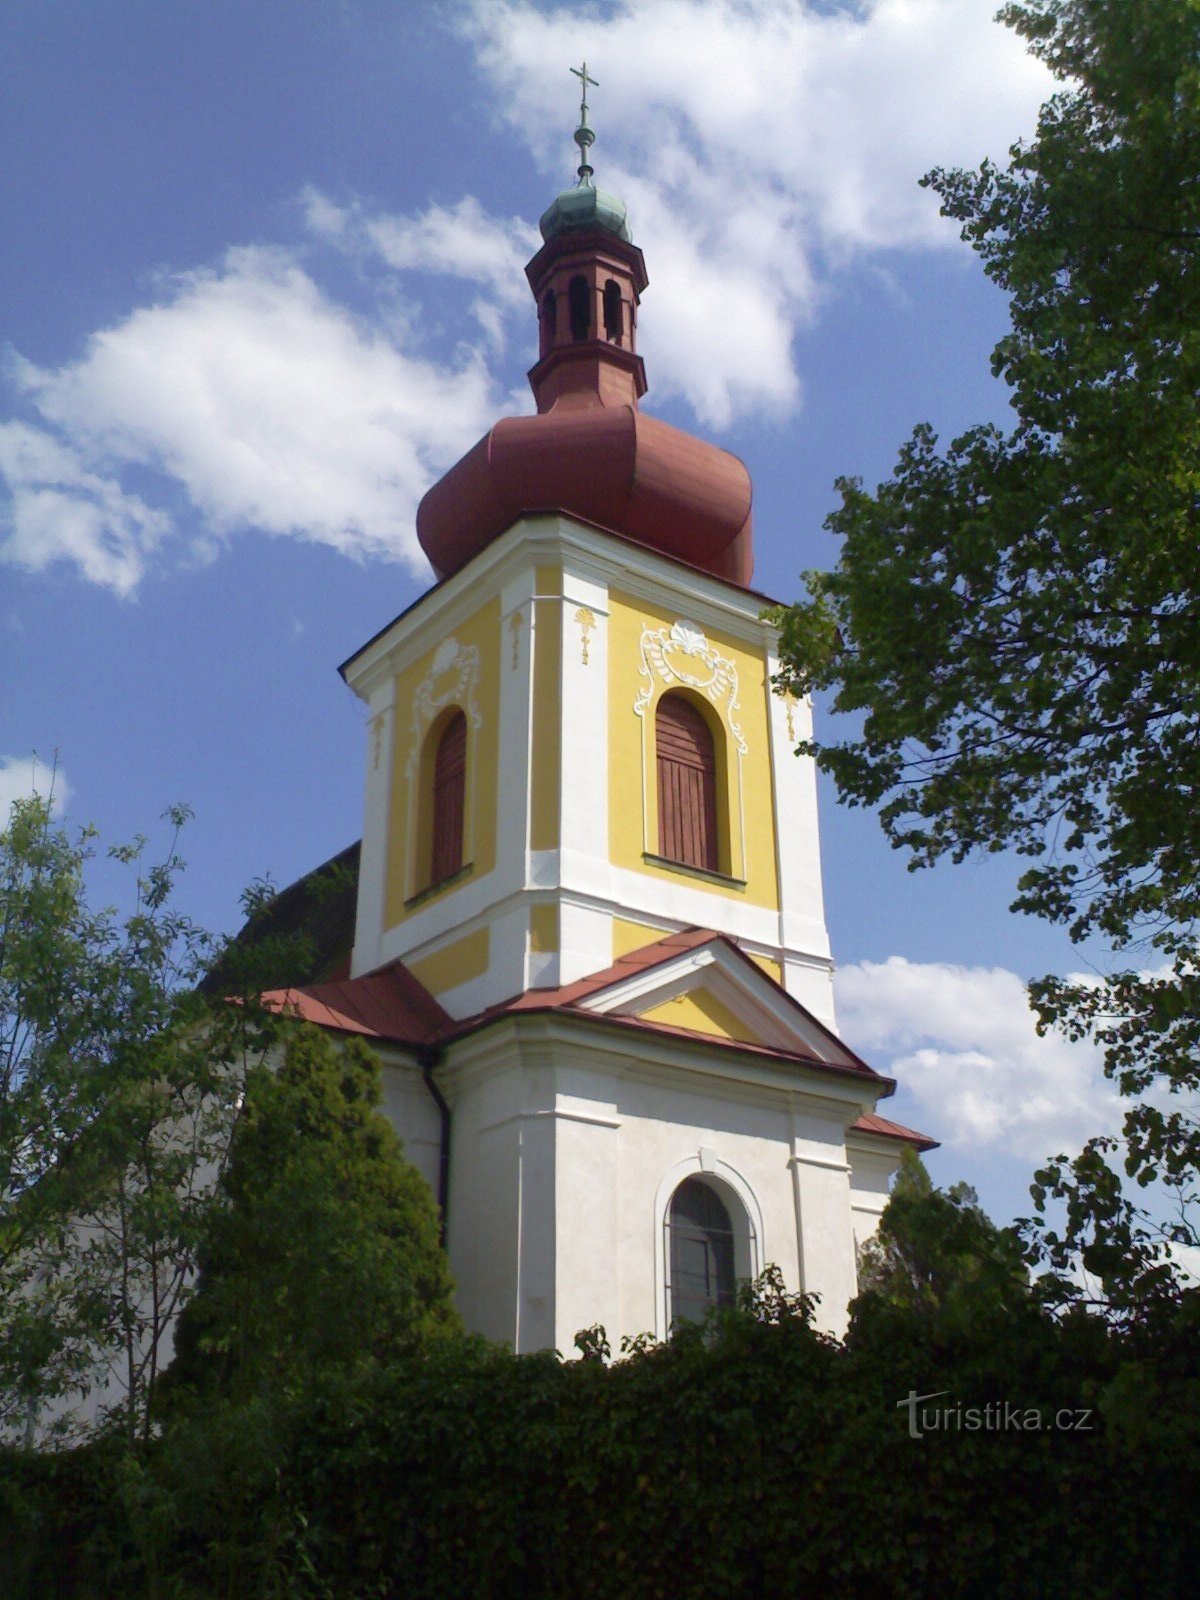 Křivice - church of St. Lawrence